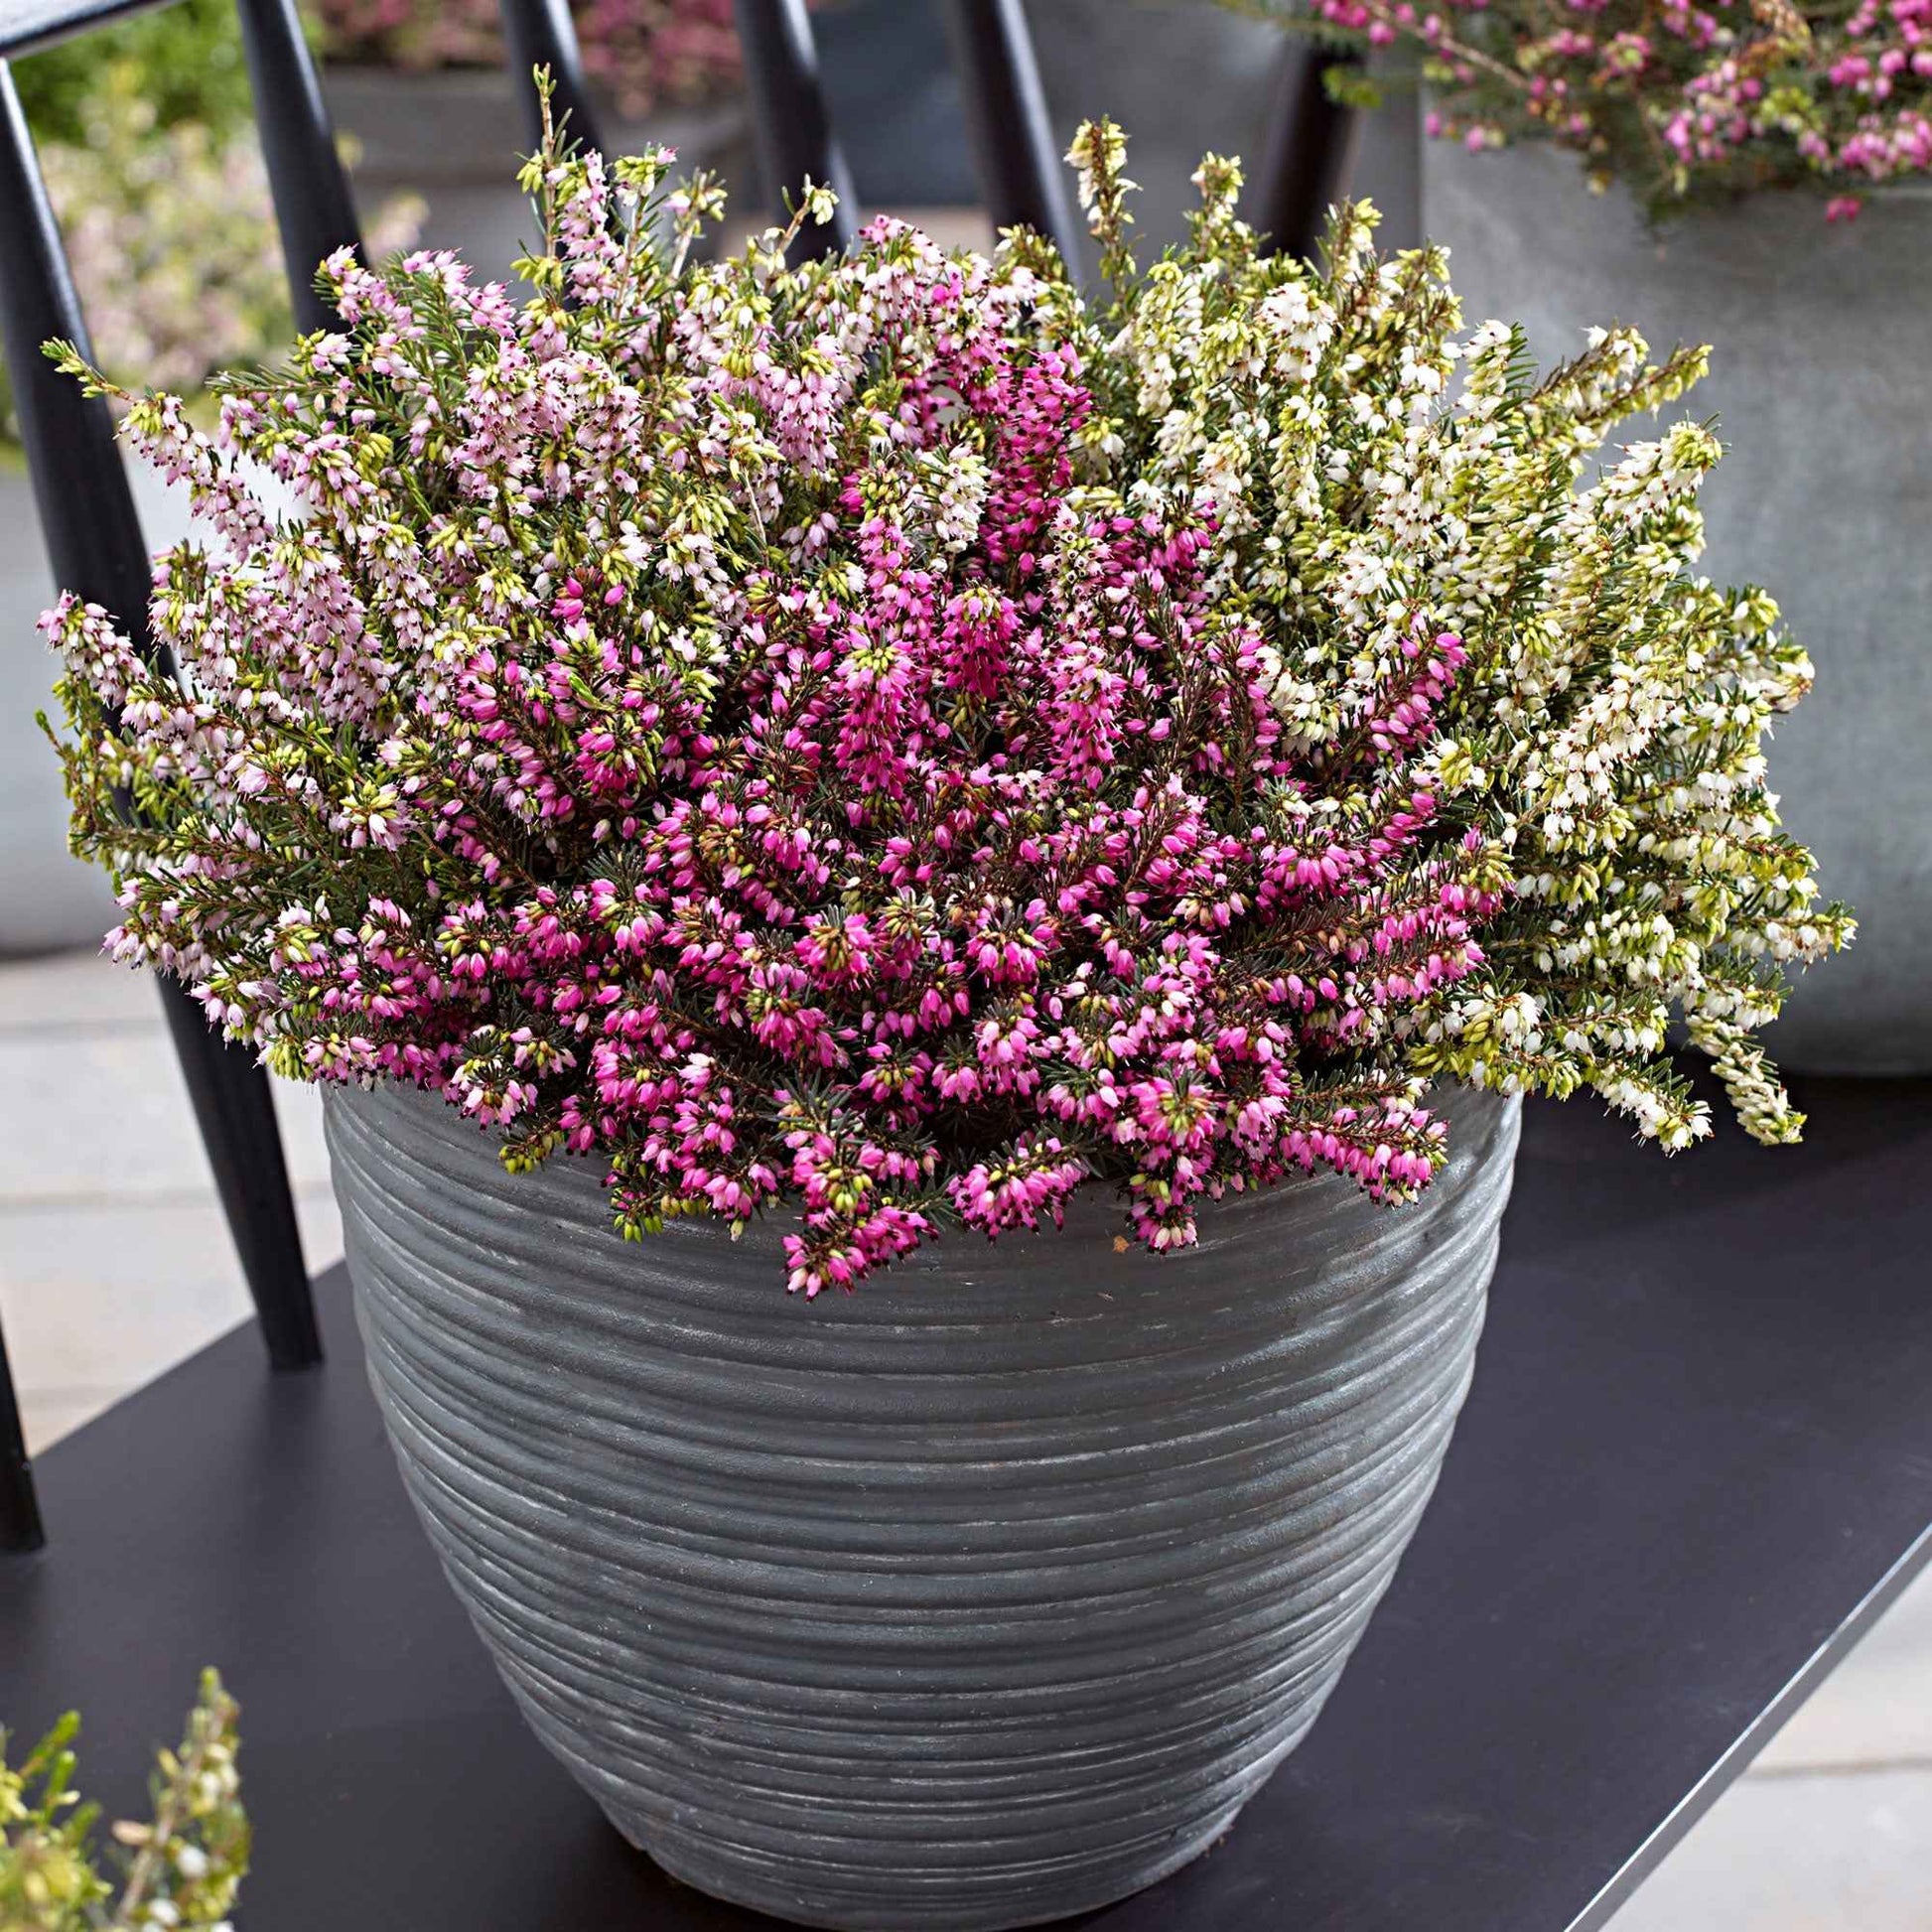 3x Englische Heide - Mischung 'Spring Colors' Rosa-Weiß-Lila - Winterhart - Gartenpflanzen